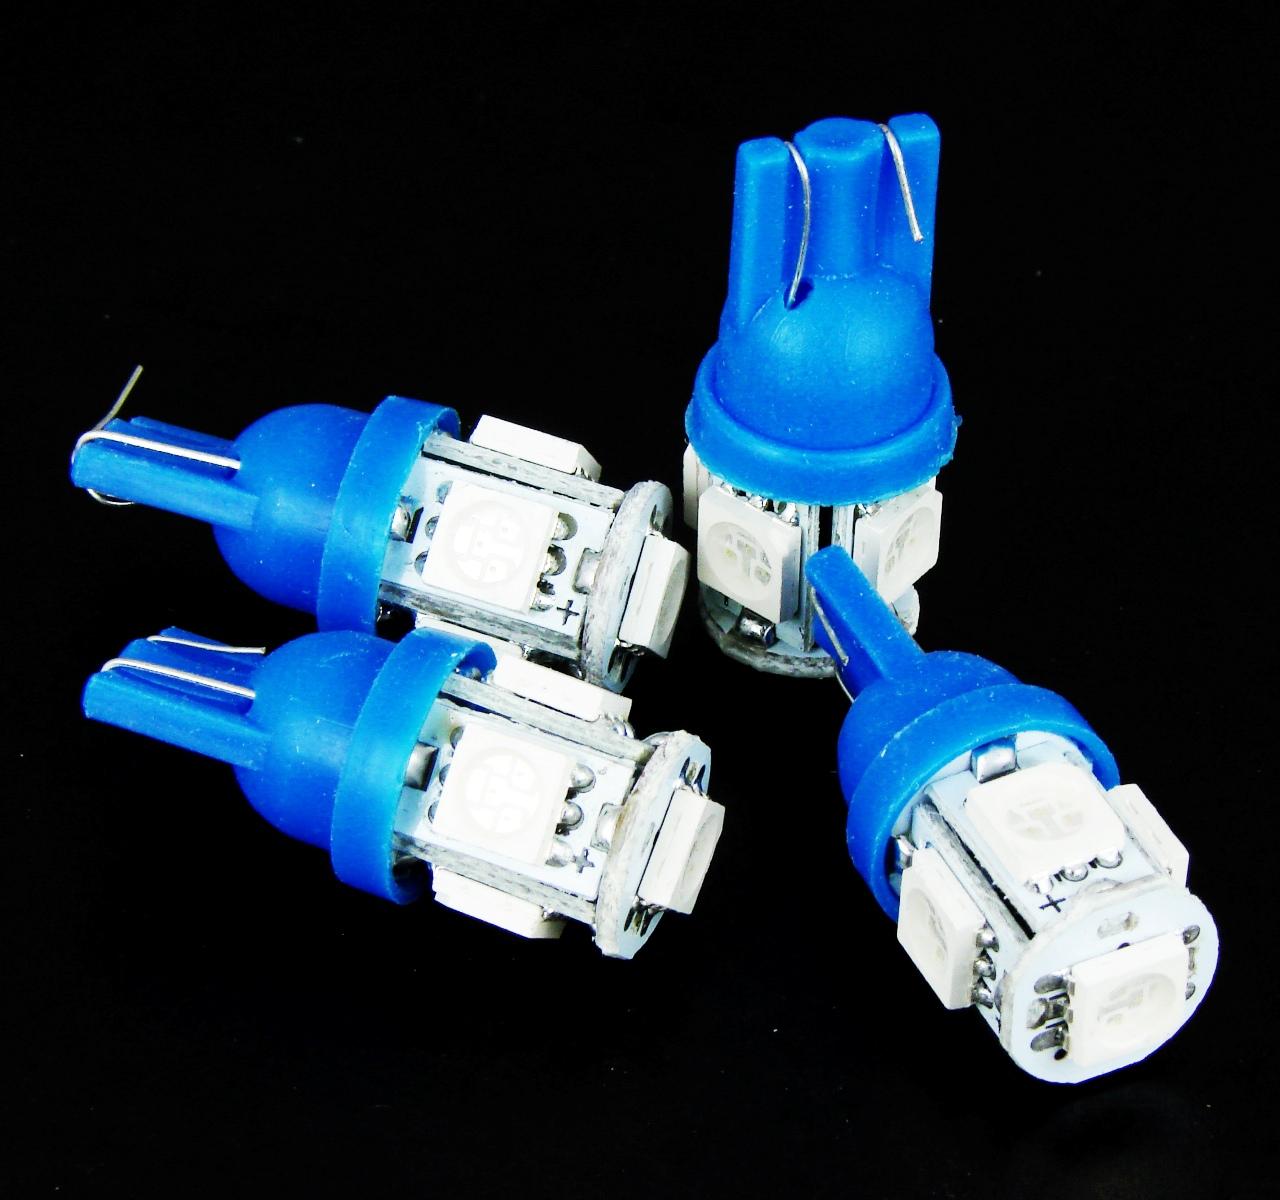   _5 LED blue T10 W5W Car Light Bulbs